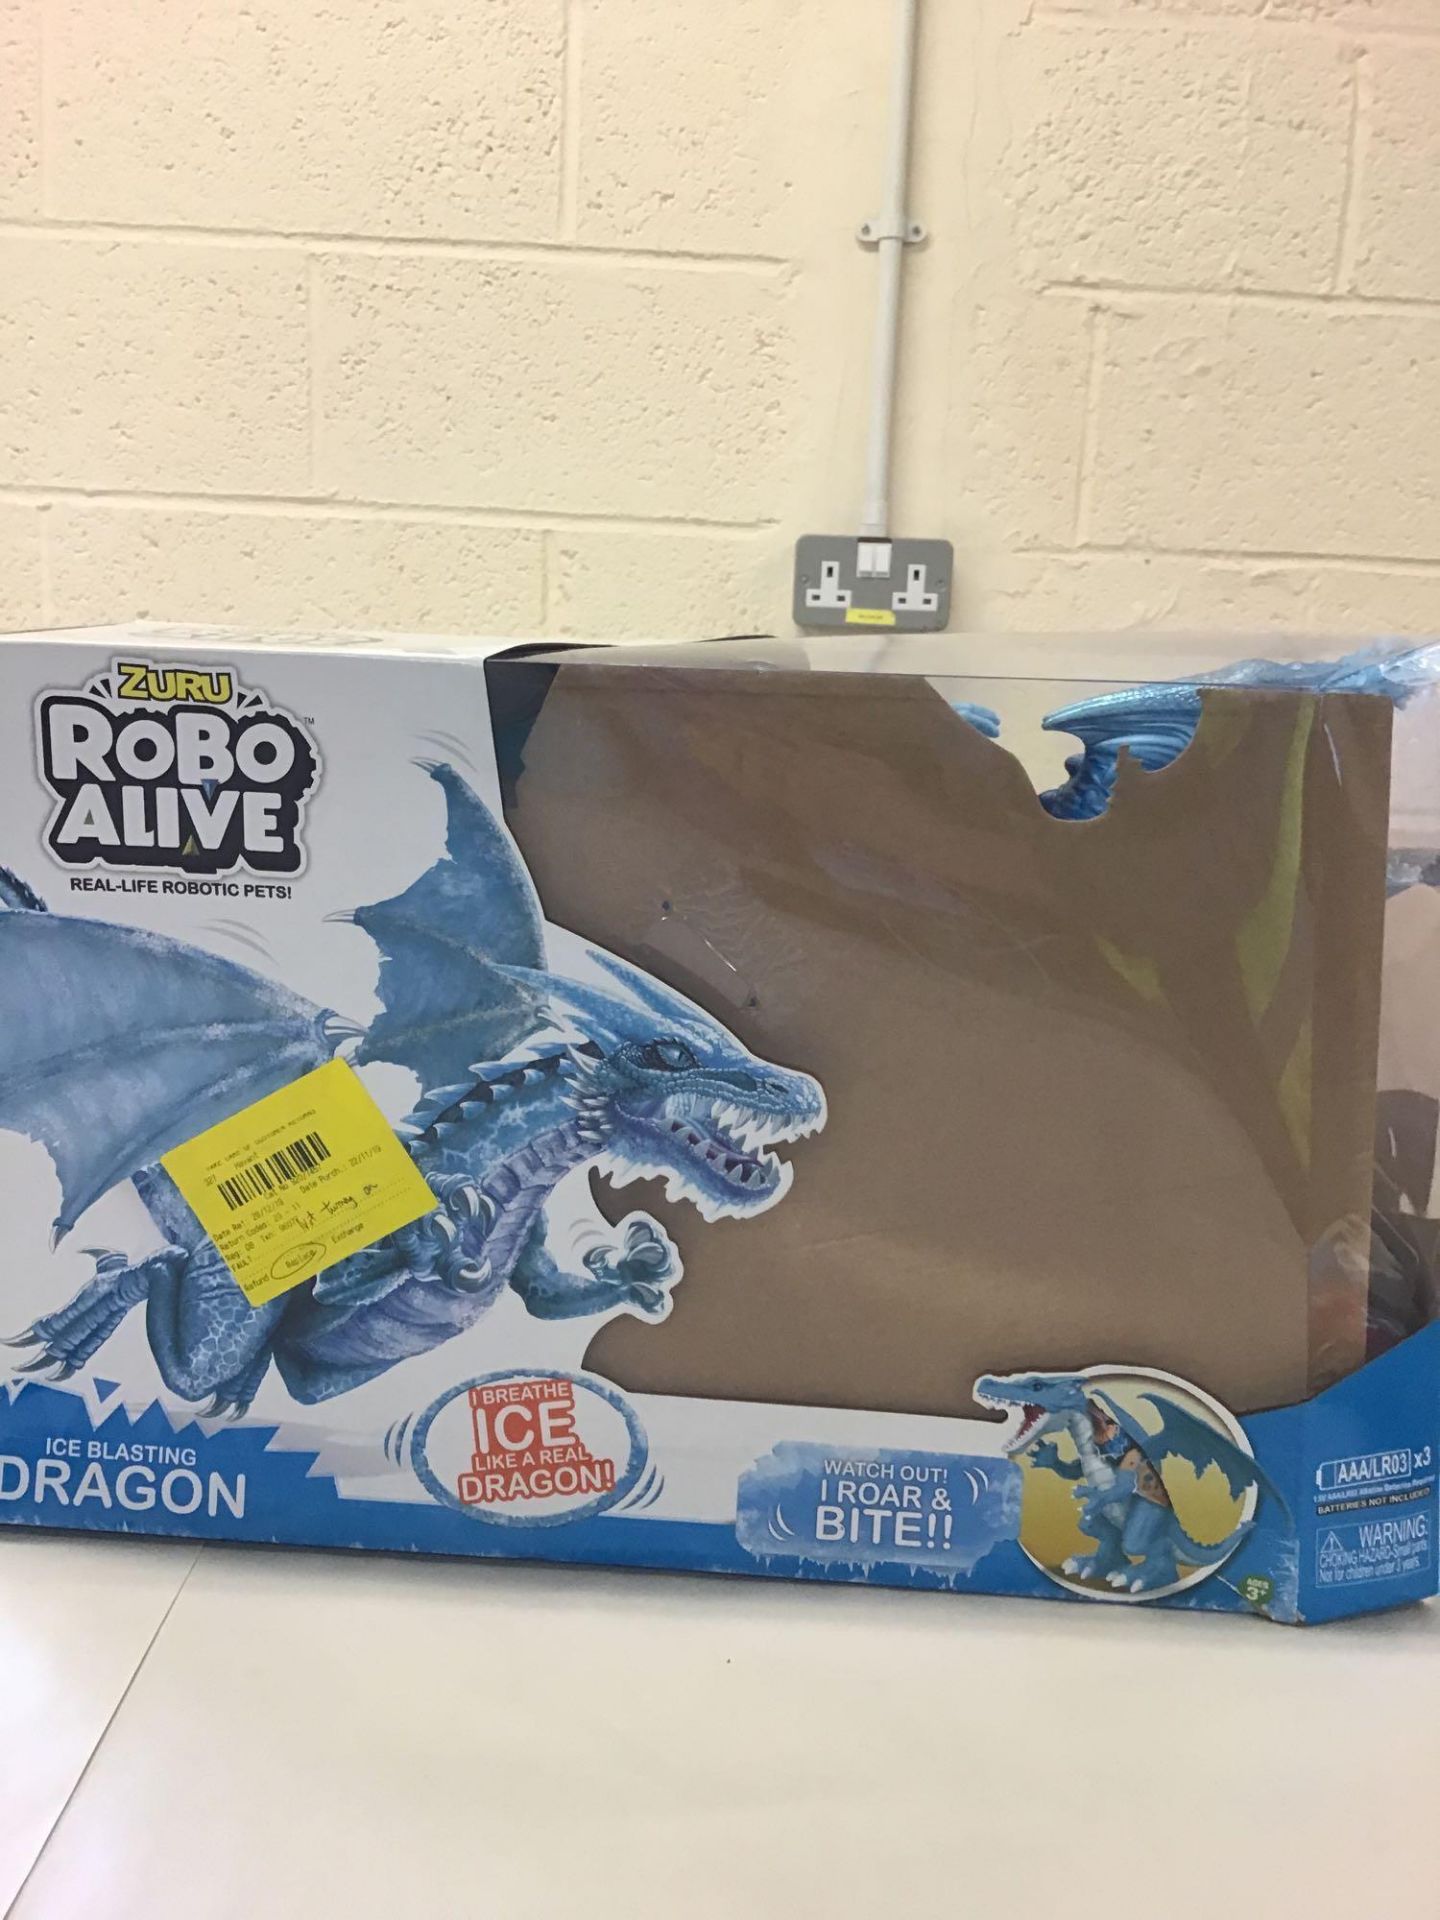 Zuru Robo Alive Ice Blasting Dragon - Blue 920/7457 £20.00 RRP - Image 3 of 5